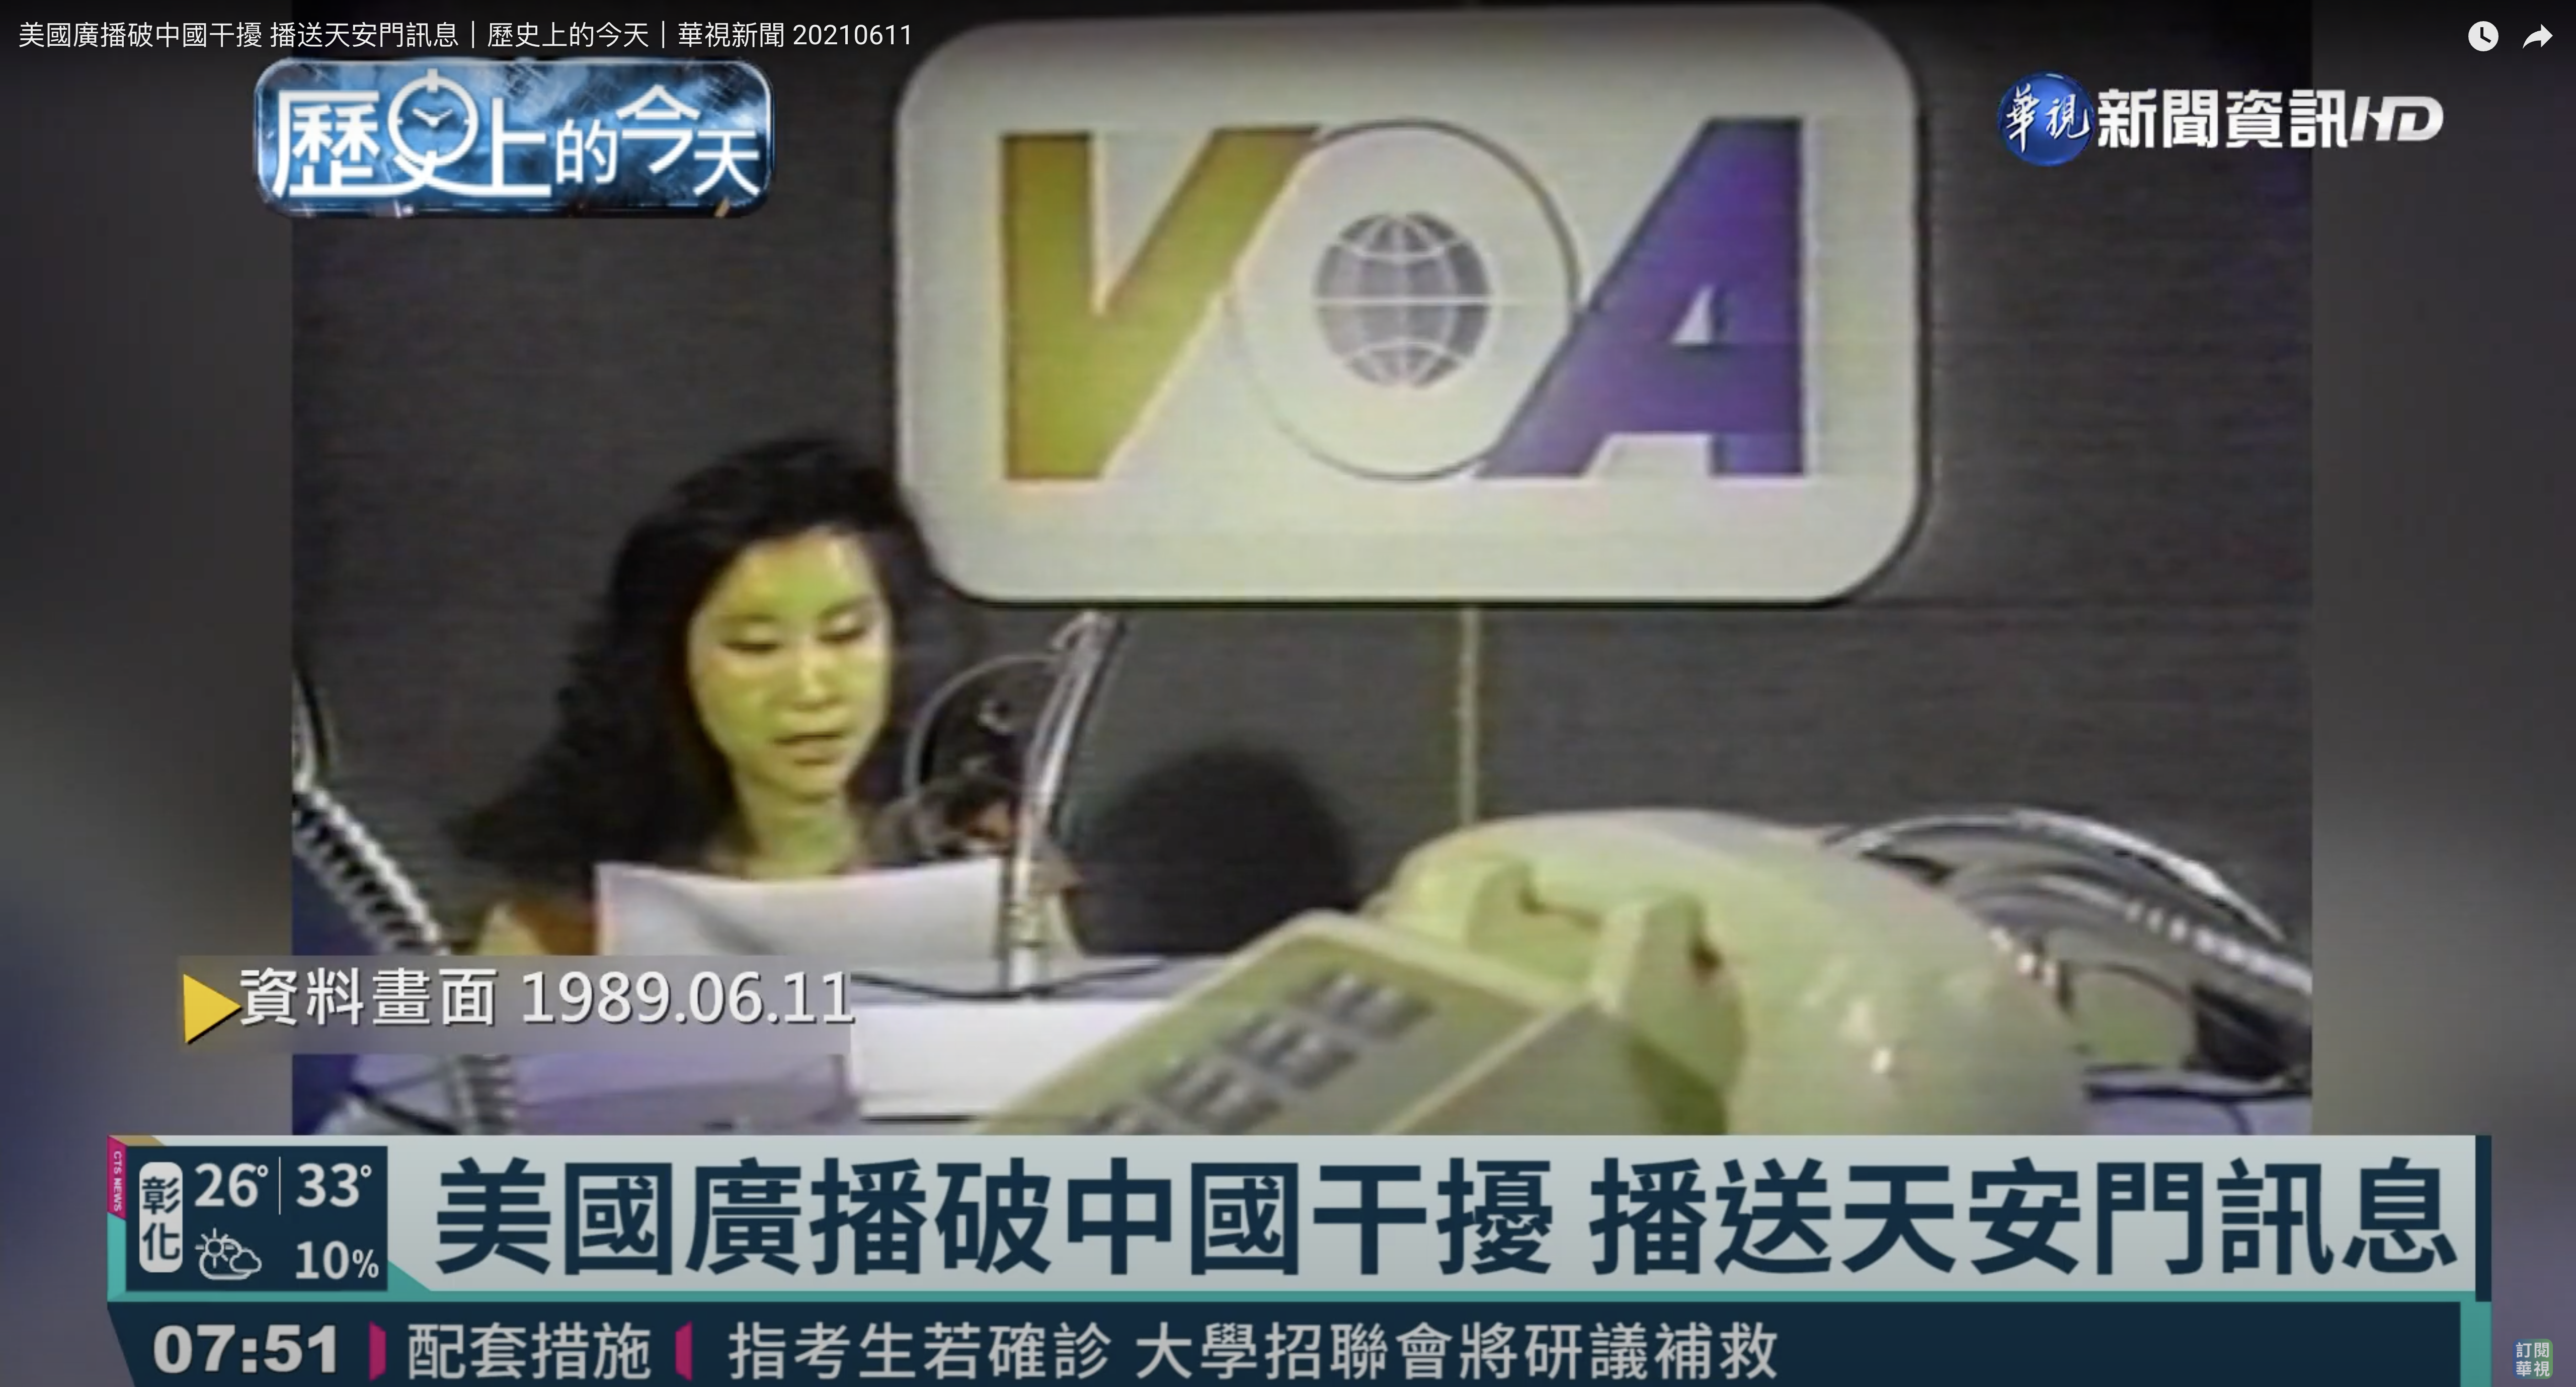 1989 – VOA affiliate CTS report